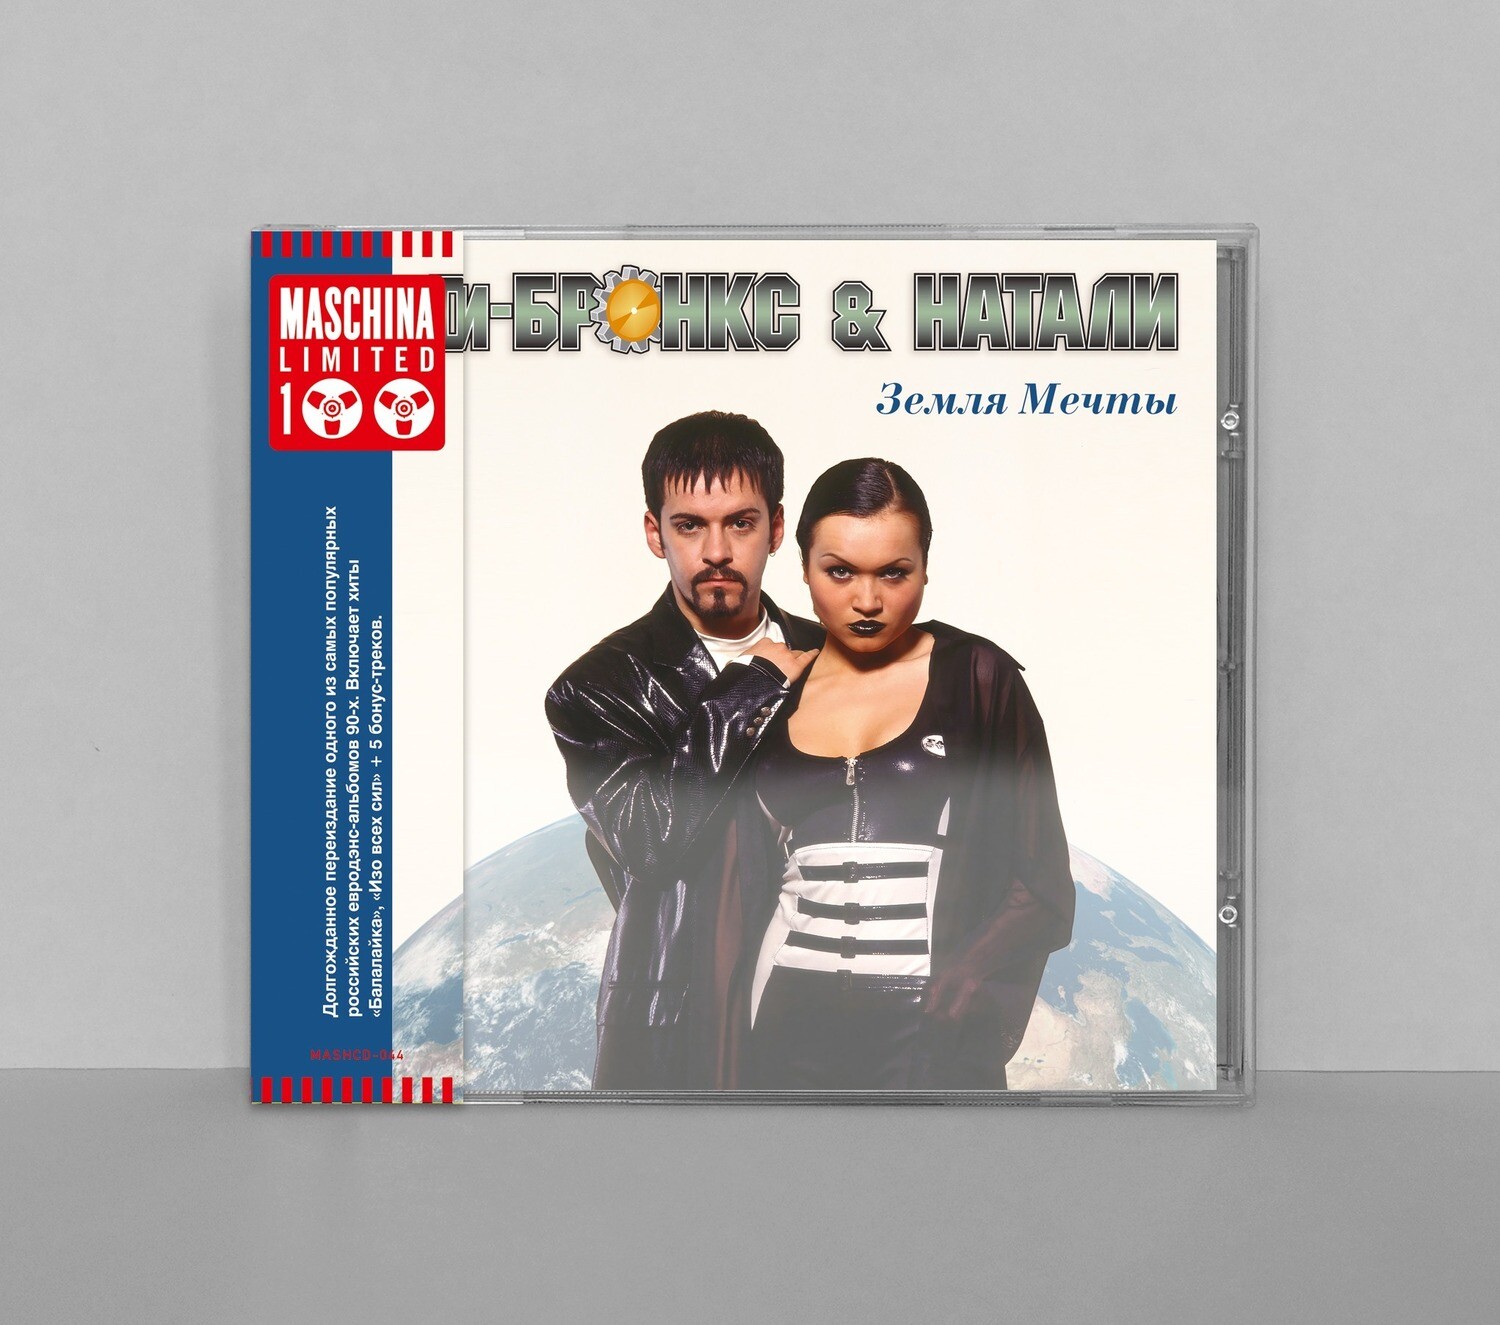 CD: Ди-Бронкс & Натали — «Земля мечты» (1997/2020) [Limited Edition]